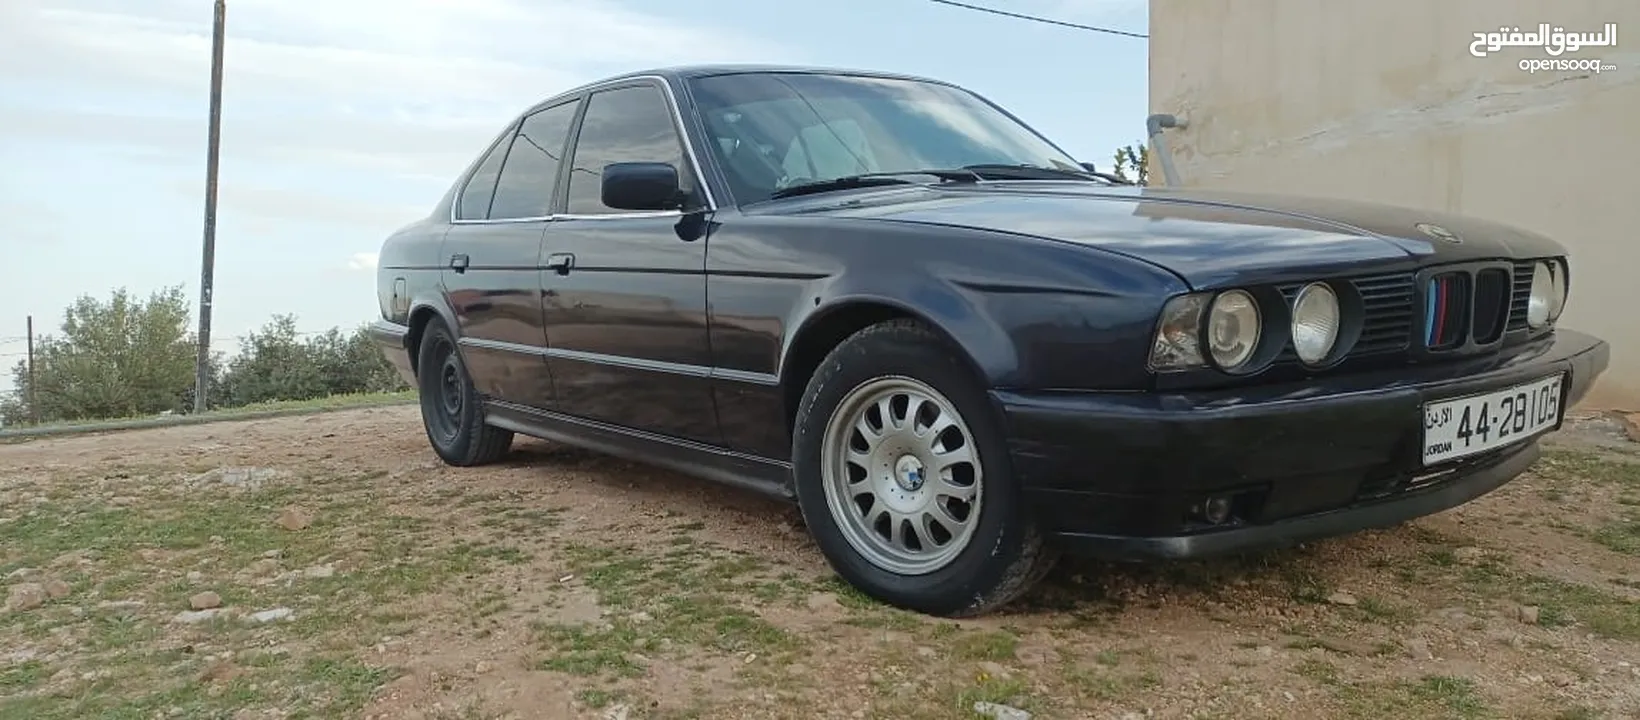 BMW 520 1991